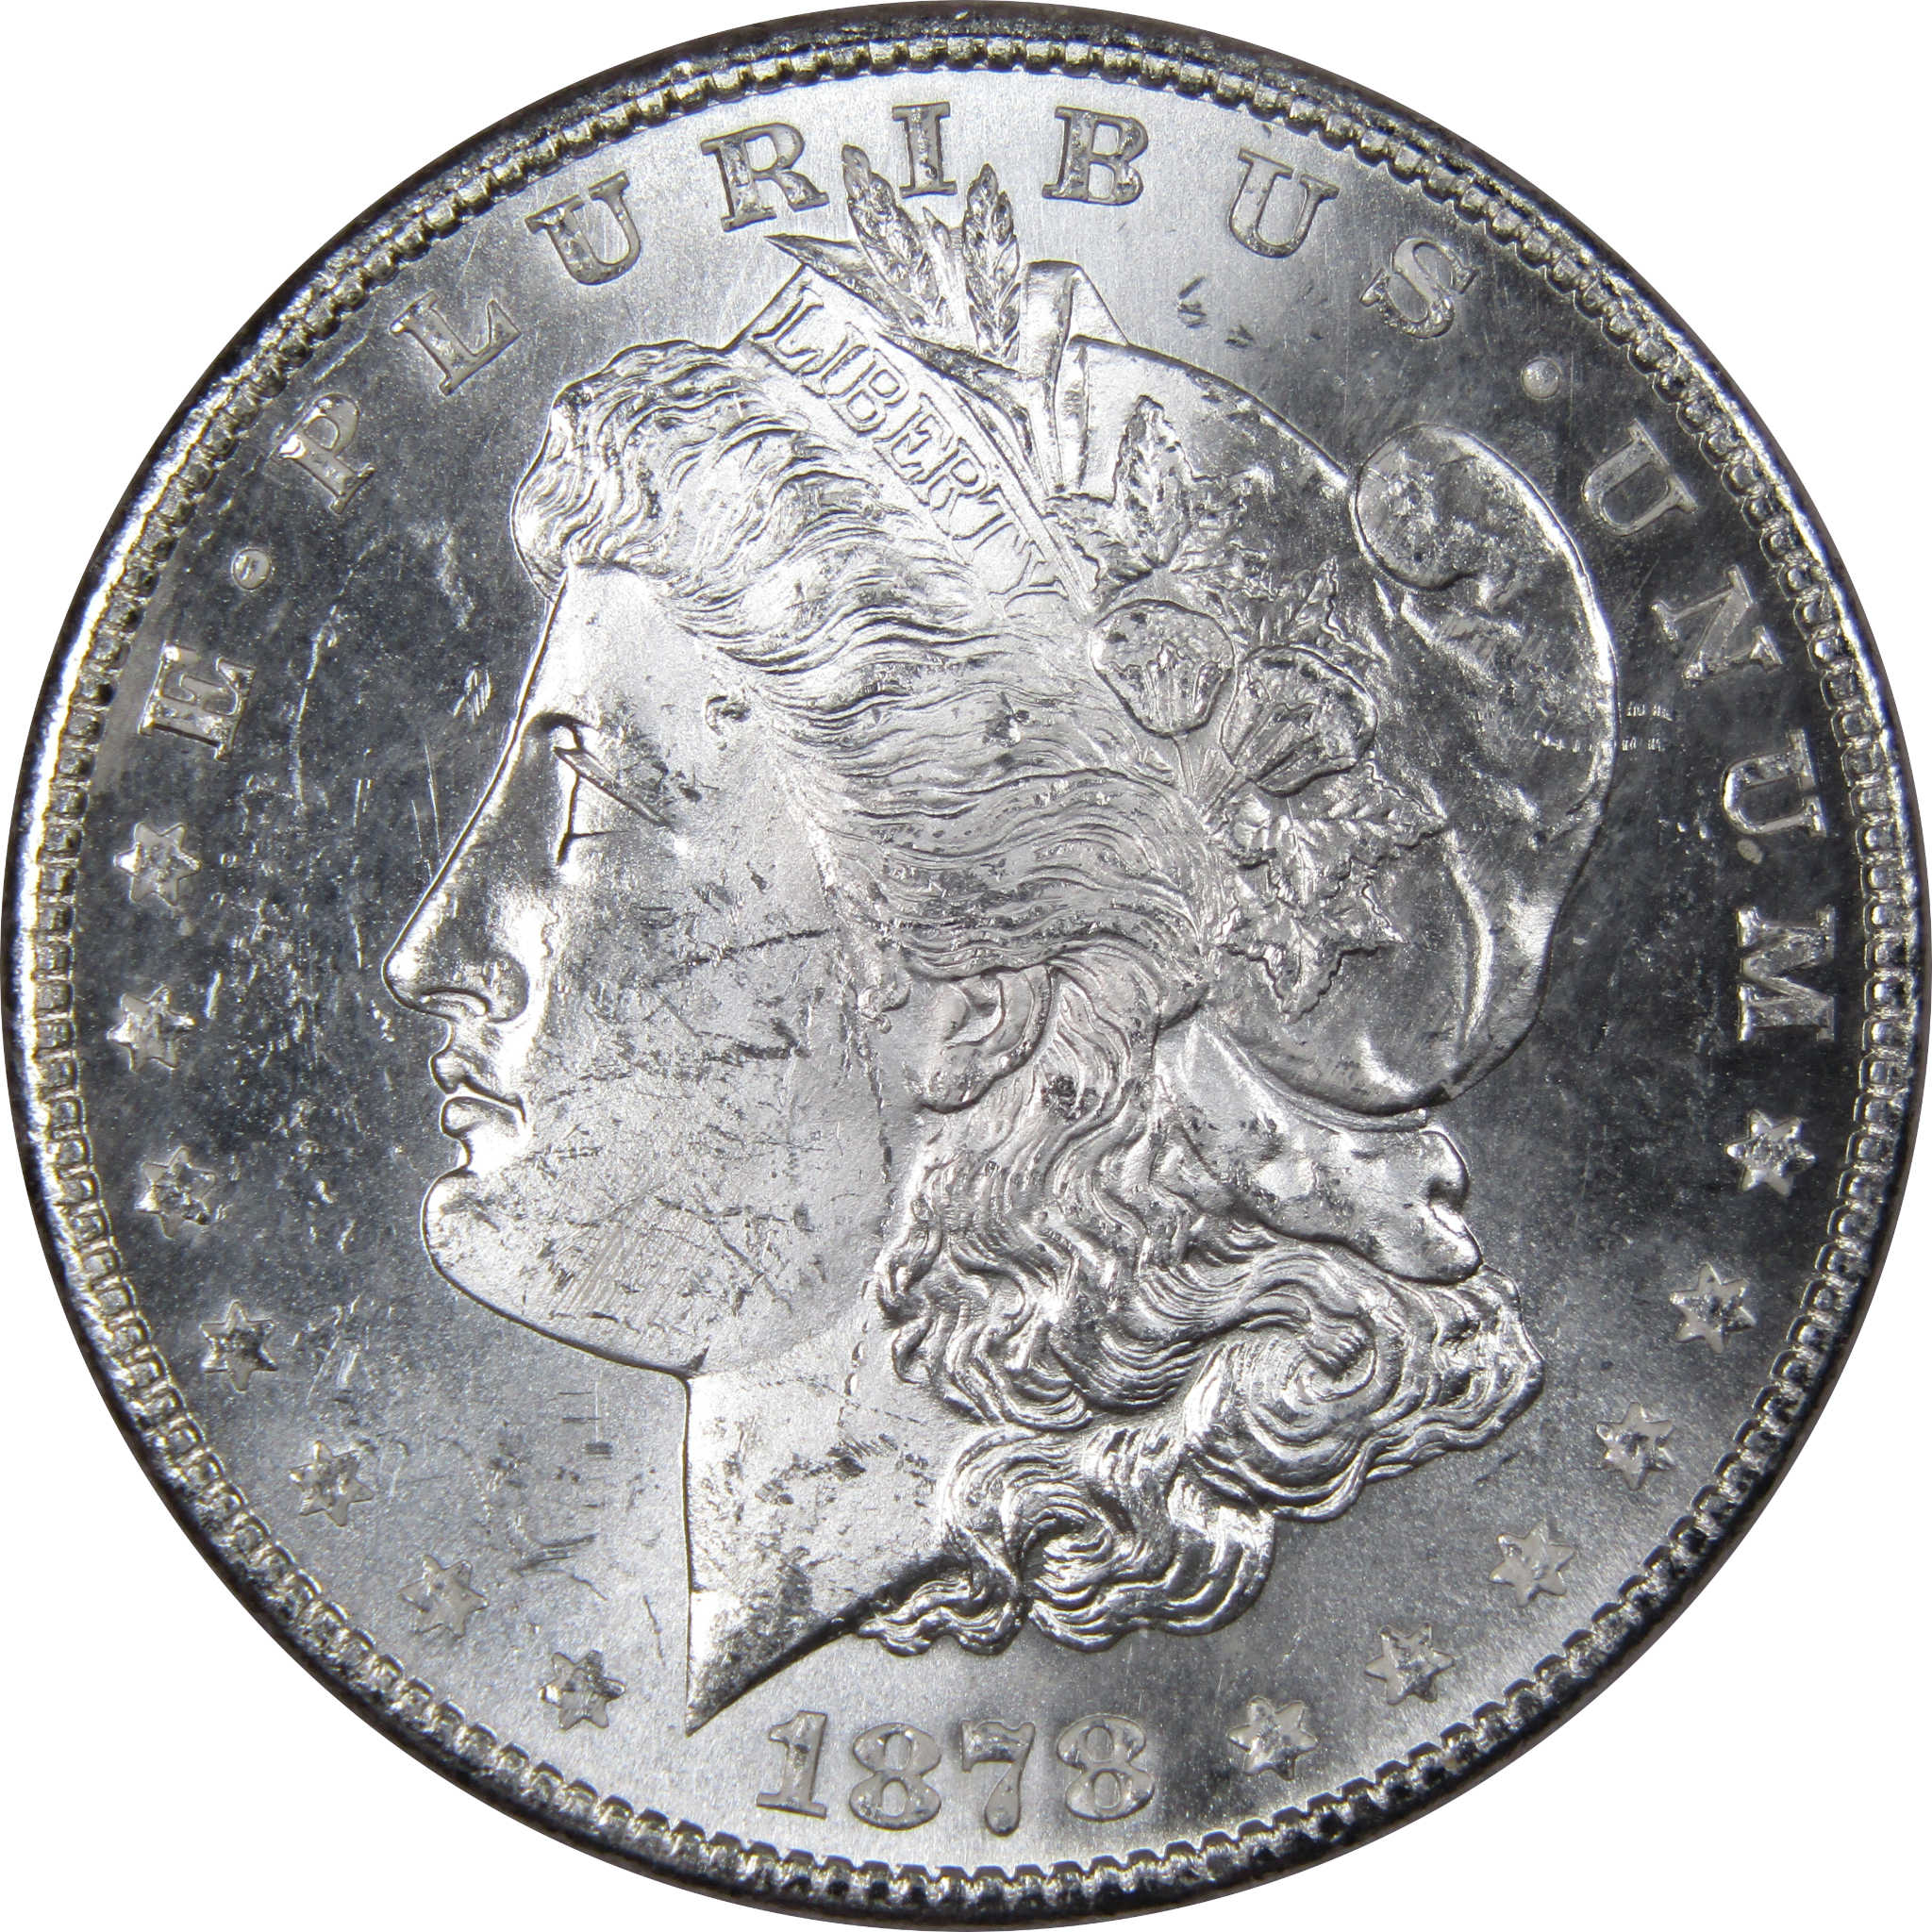 1878 S Morgan Dollar BU Uncirculated Mint State 90% Silver SKU:IPC8883 - Morgan coin - Morgan silver dollar - Morgan silver dollar for sale - Profile Coins &amp; Collectibles